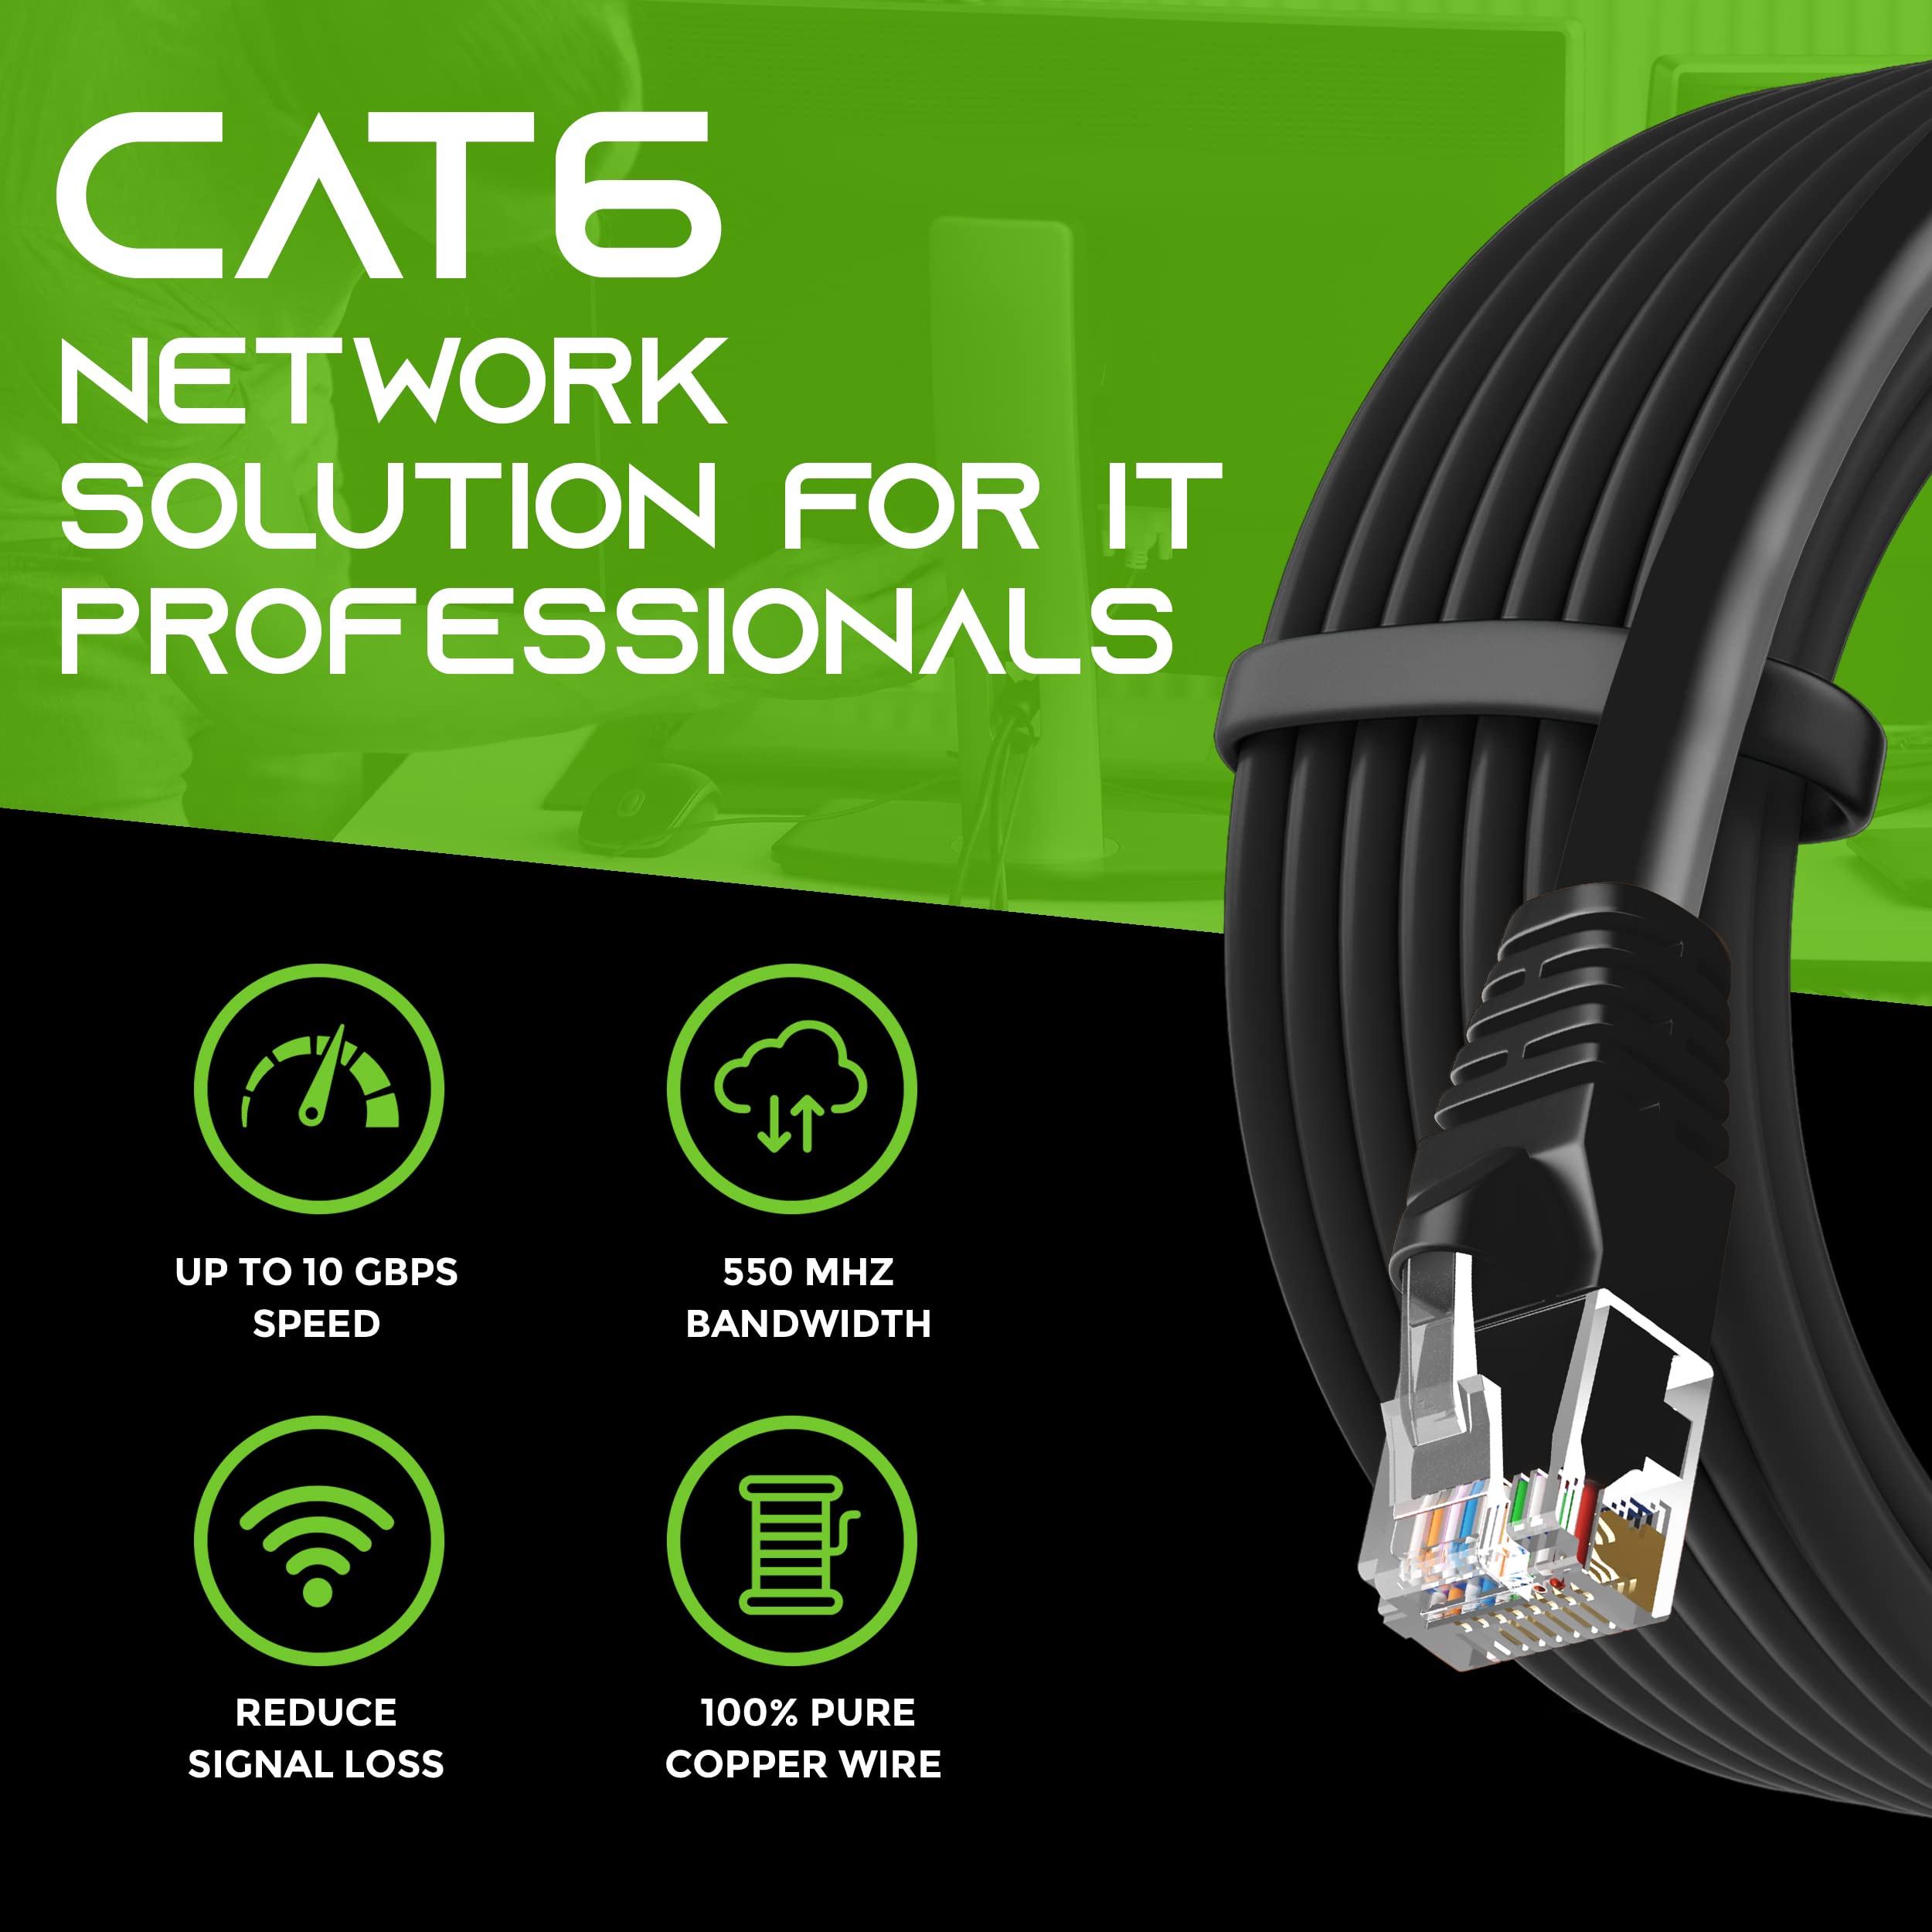 GearIT Cat 6 Ethernet Cable 6 ft (10-Pack) - Cat6 Patch Cable, Cat 6 Patch Cable, Cat6 Cable, Cat 6 Cable, Cat6 Ethernet Cable, Network Cable, Internet Cable - Black 6 Feet